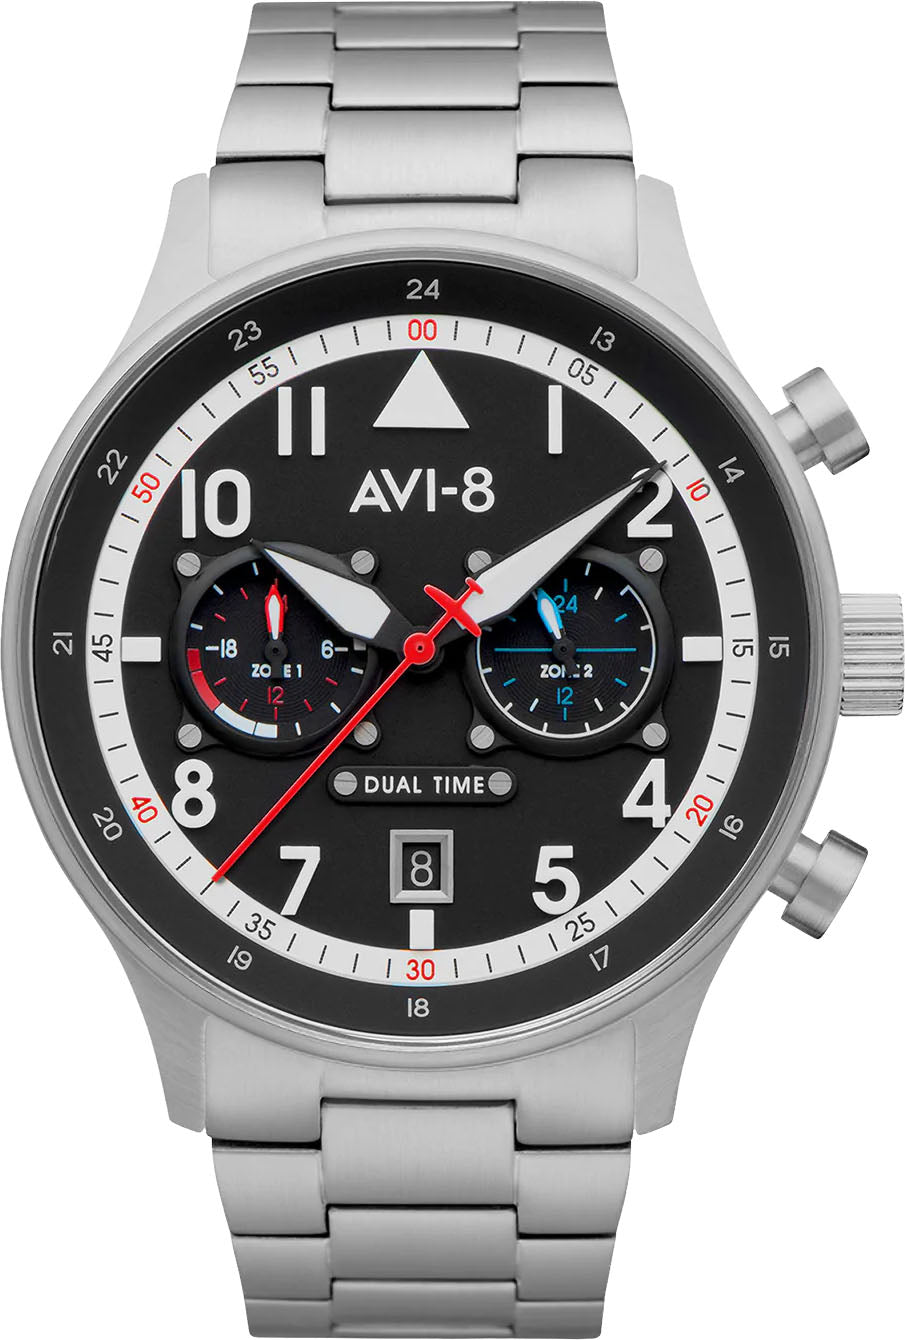 Photos - Wrist Watch AVI-8 Watch Hawker Hurricane Carey Dual Time Rangoon - Black AV-140 